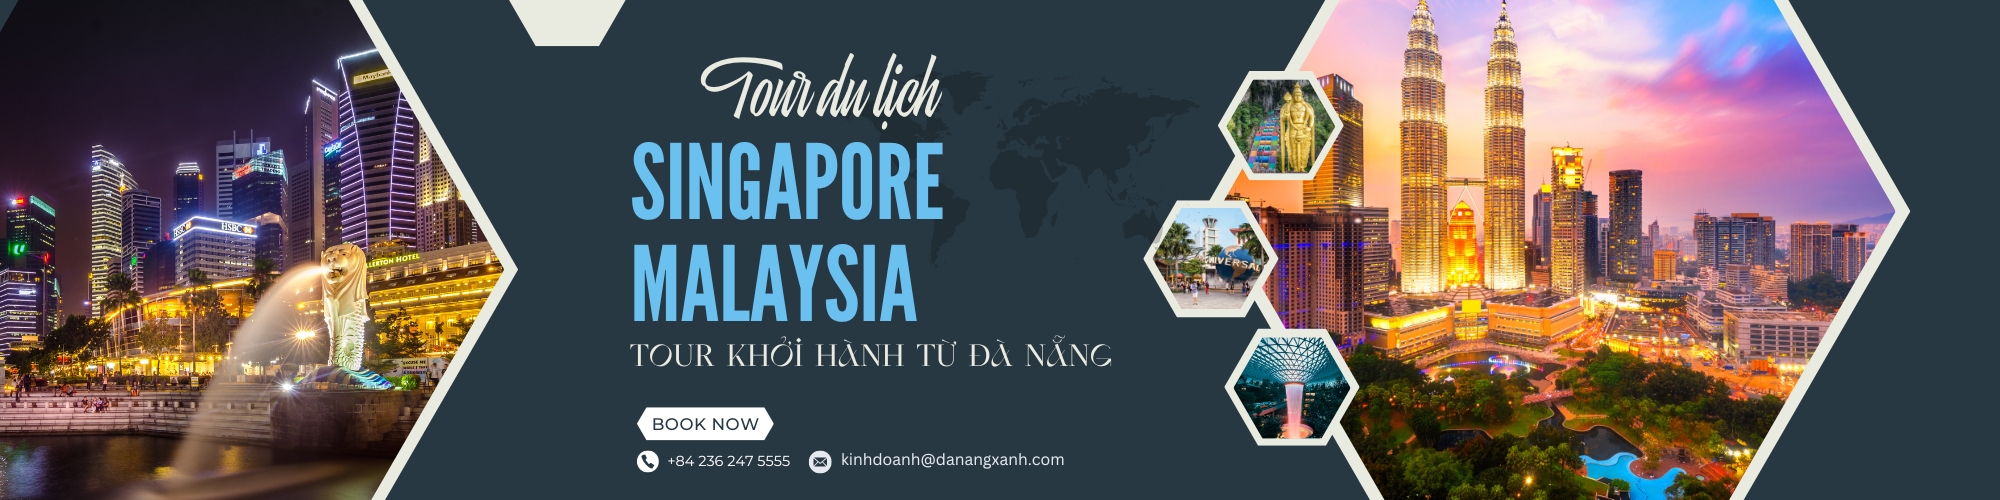 Tour Đà Nẵng Singapore Malaysia